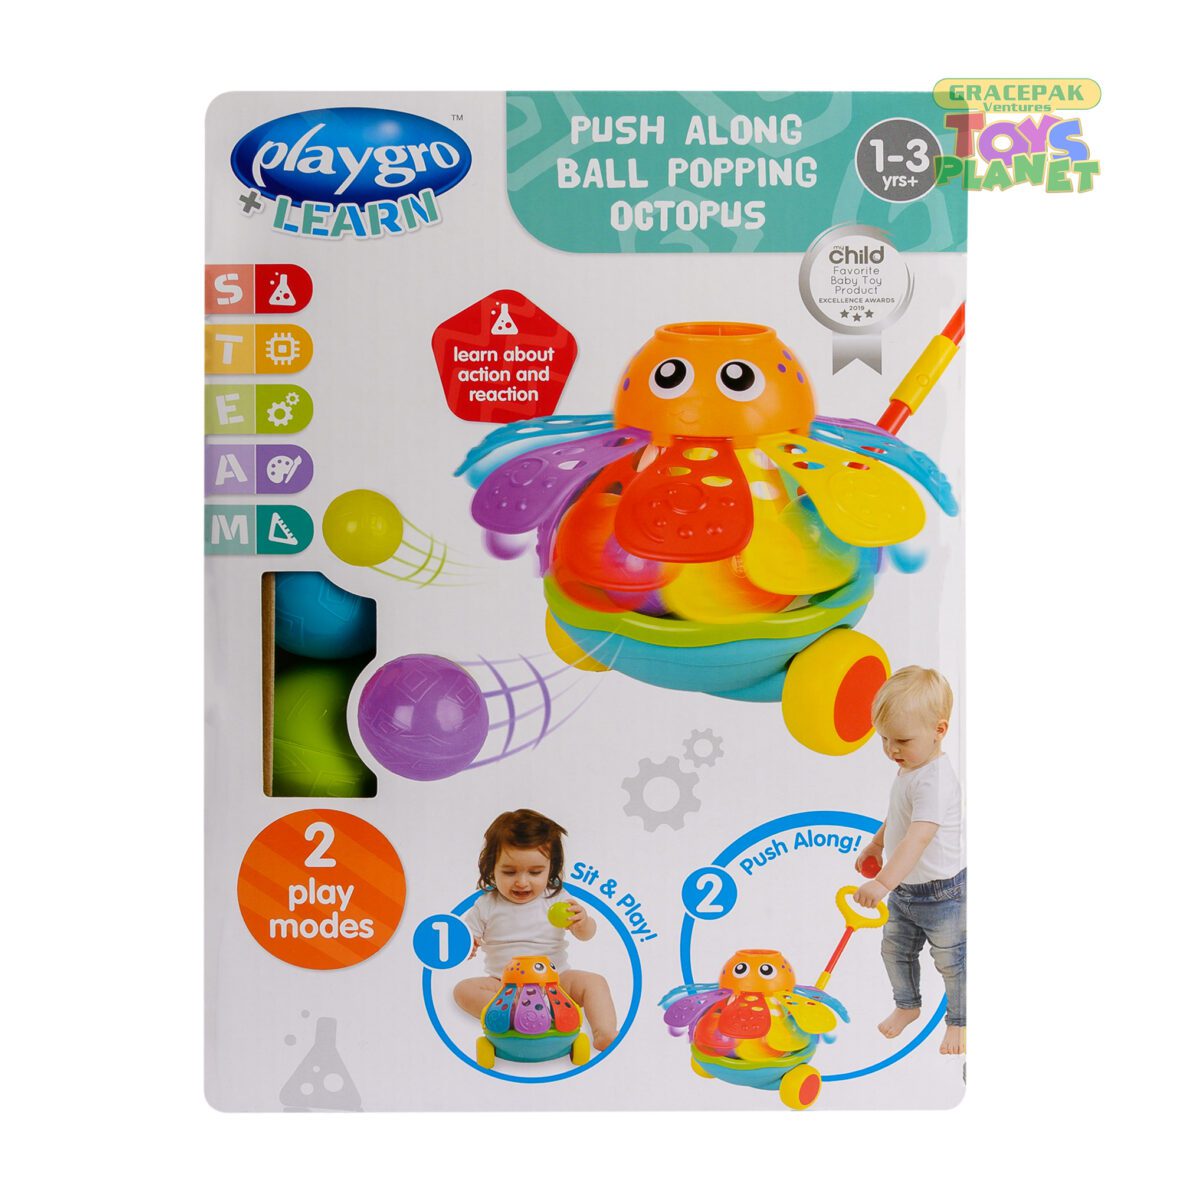 Push Along Ball Popping Octopus